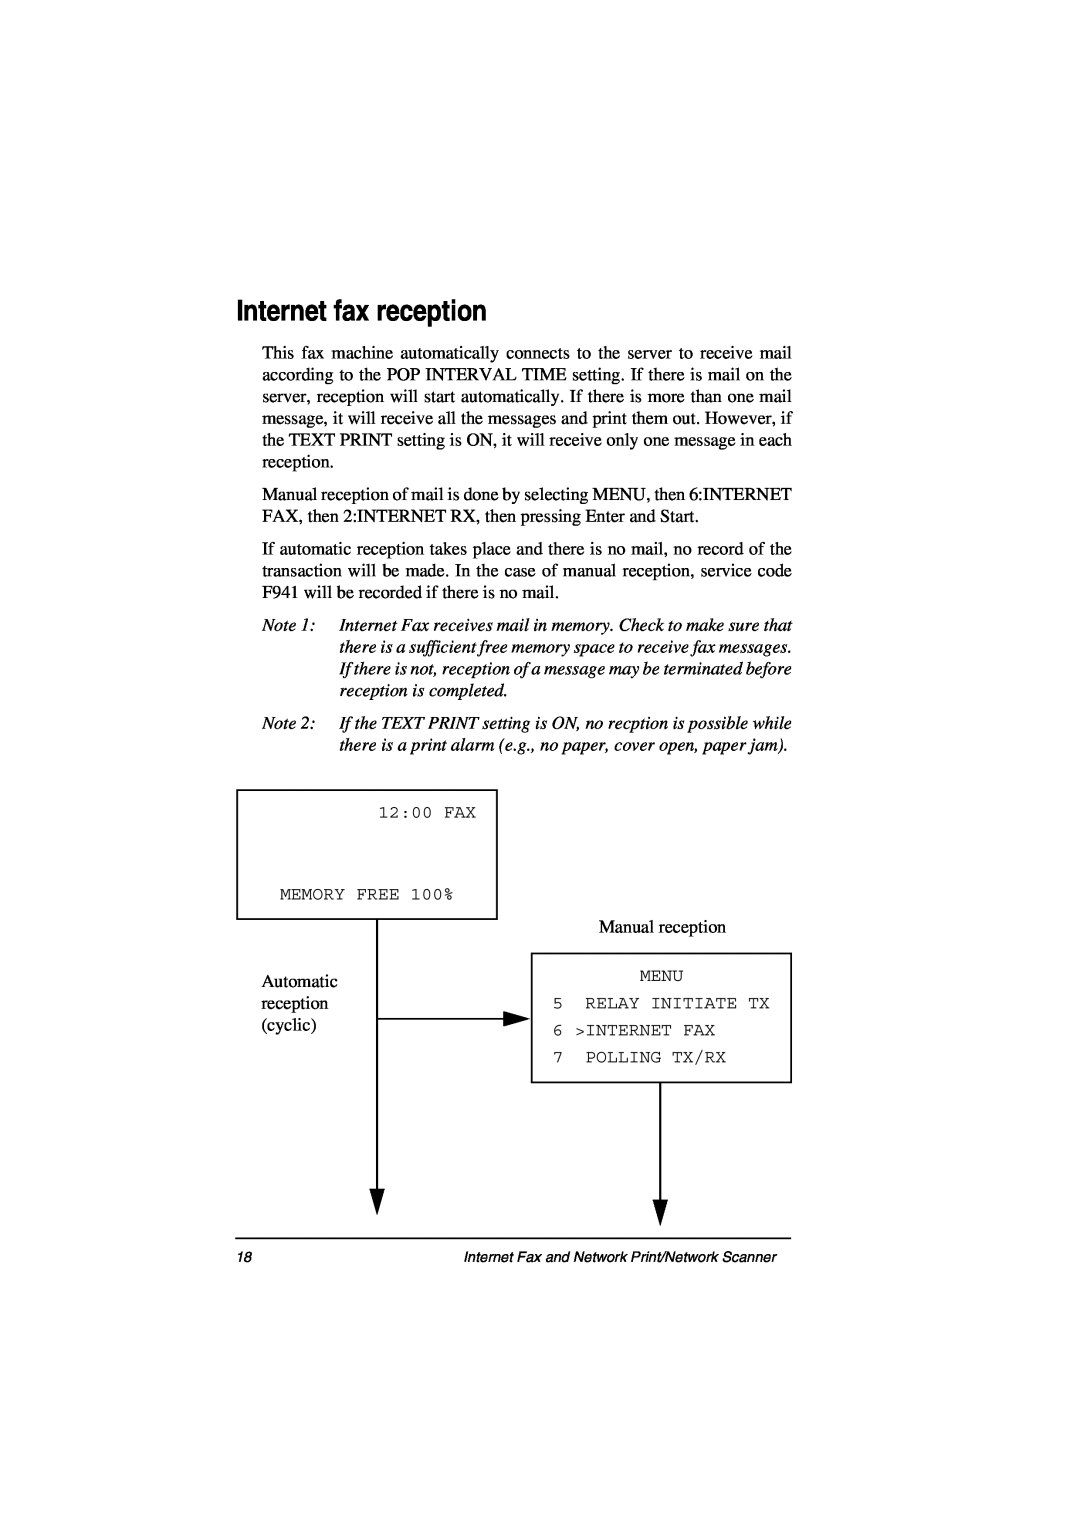 Oki ii manual Internet fax reception 